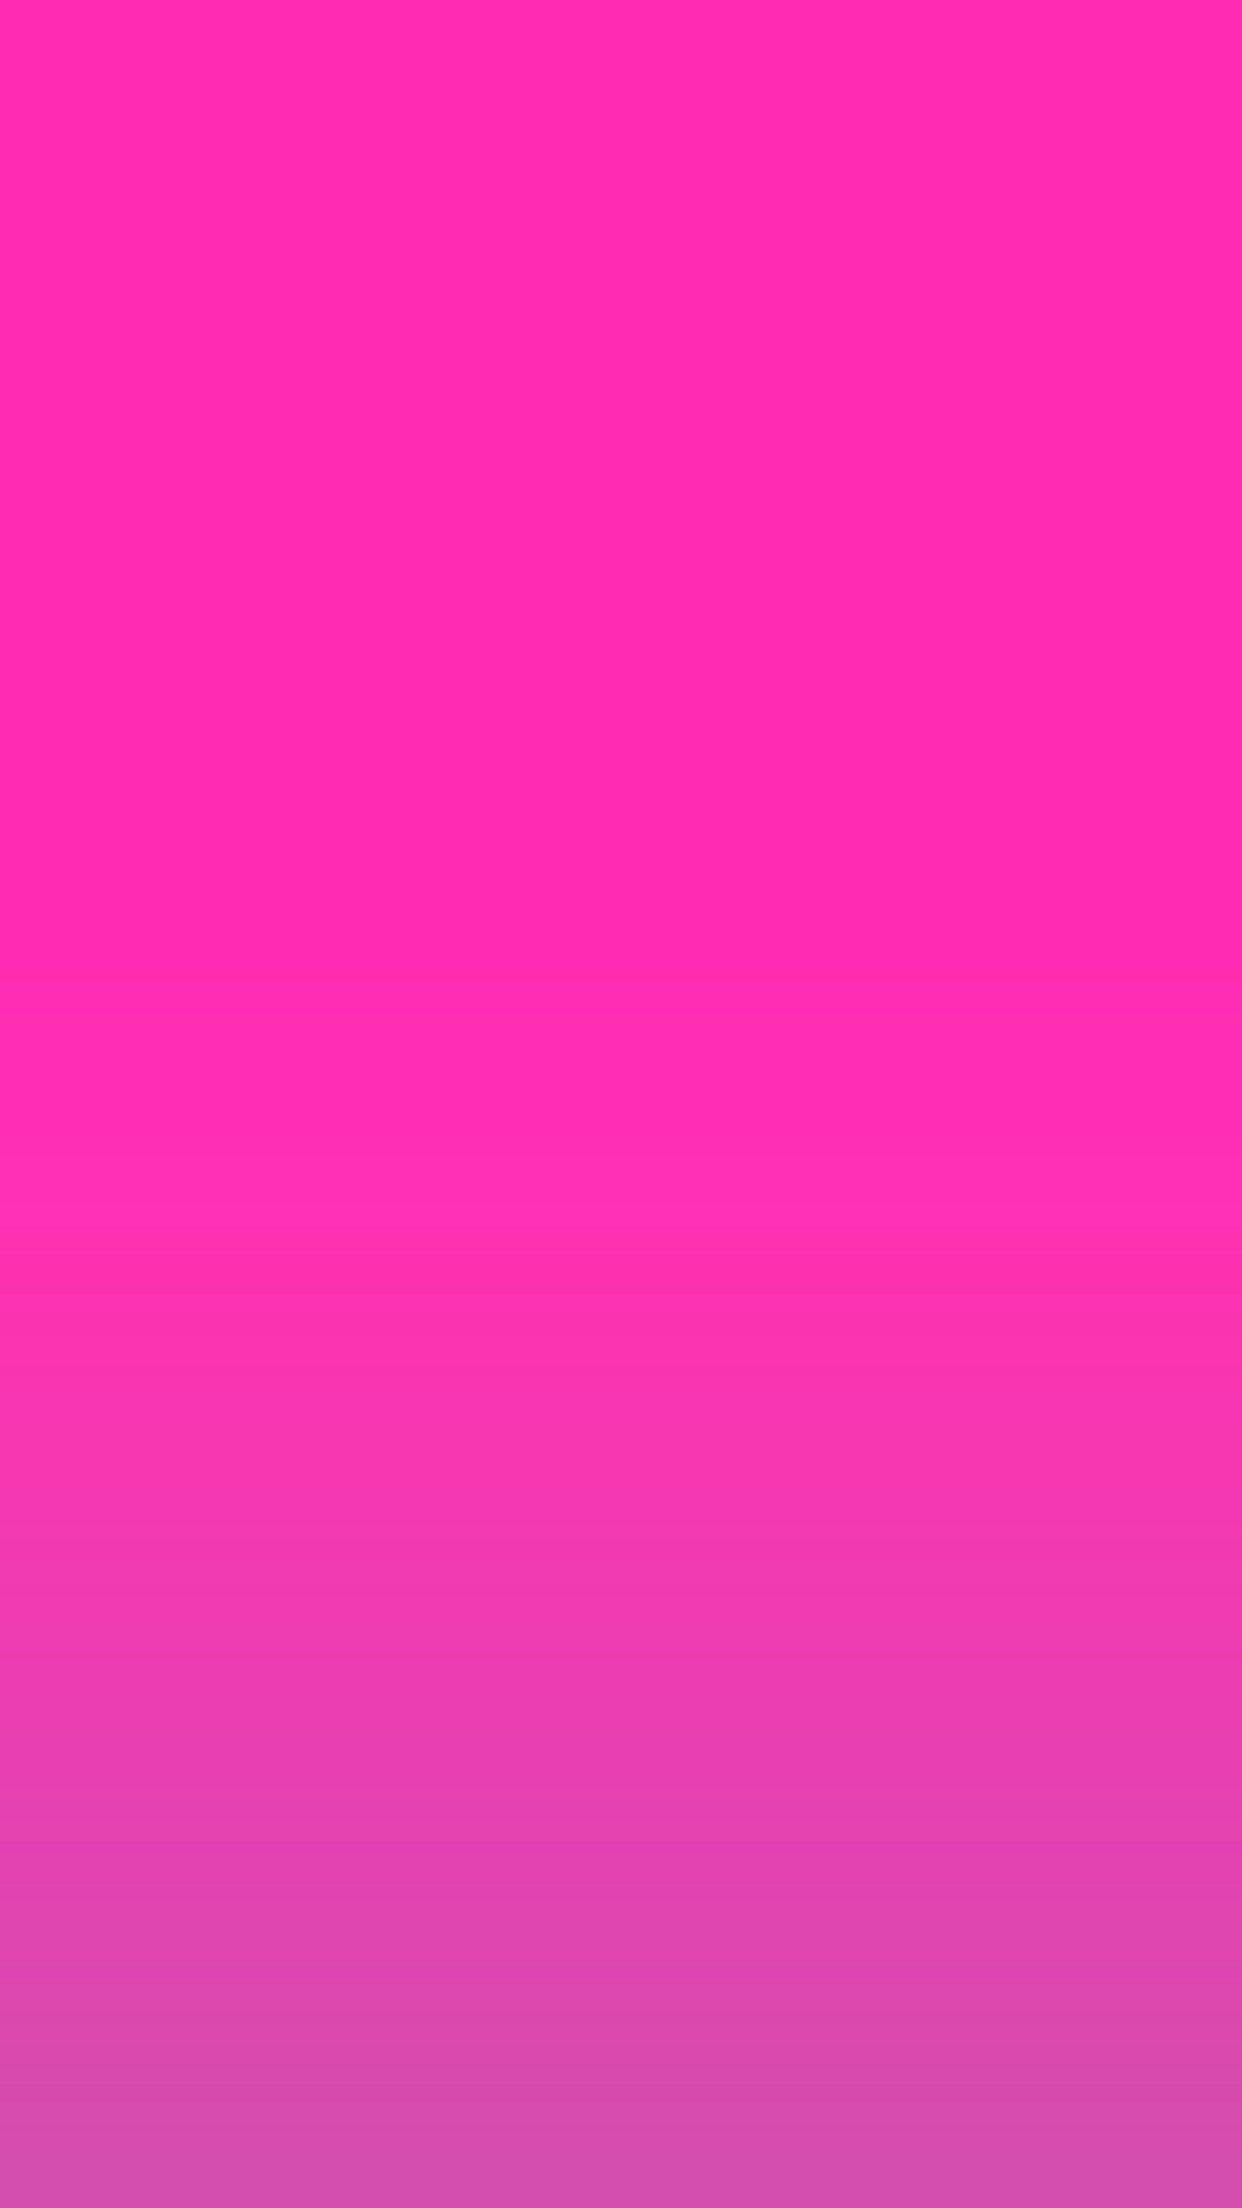 Pink 2000  Hot pink wallpaper Pink wallpaper iphone Pink wallpaper  backgrounds